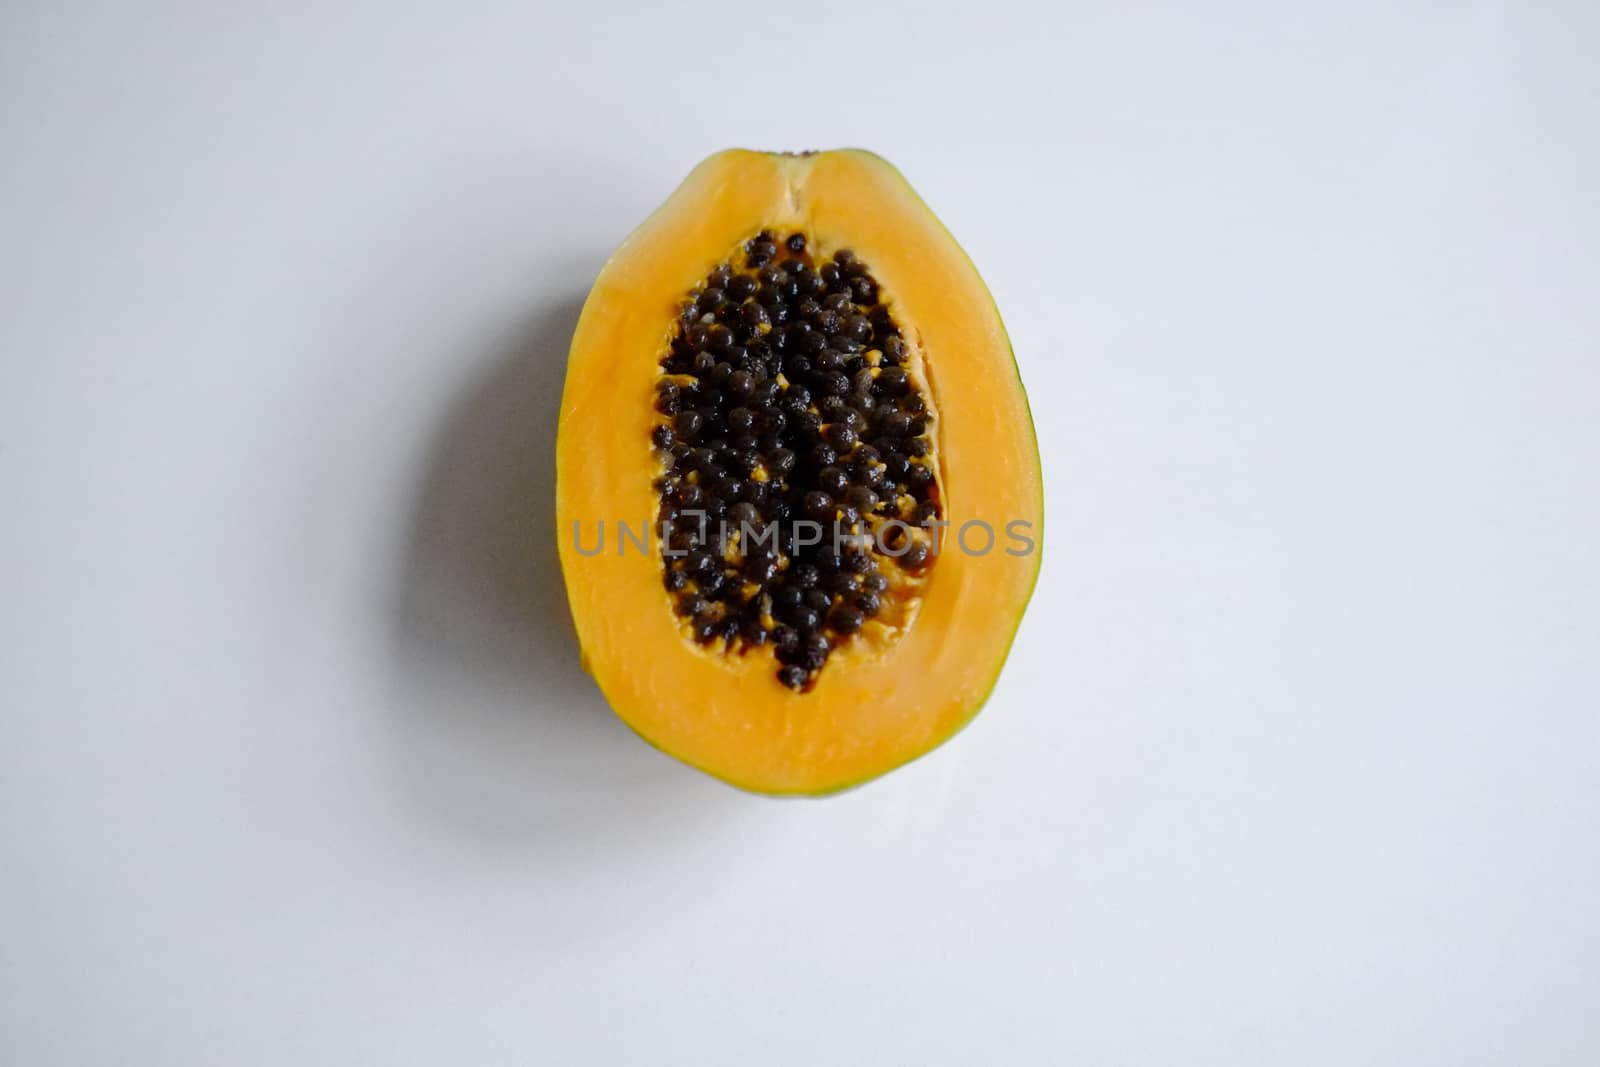 Large papaya cut in half